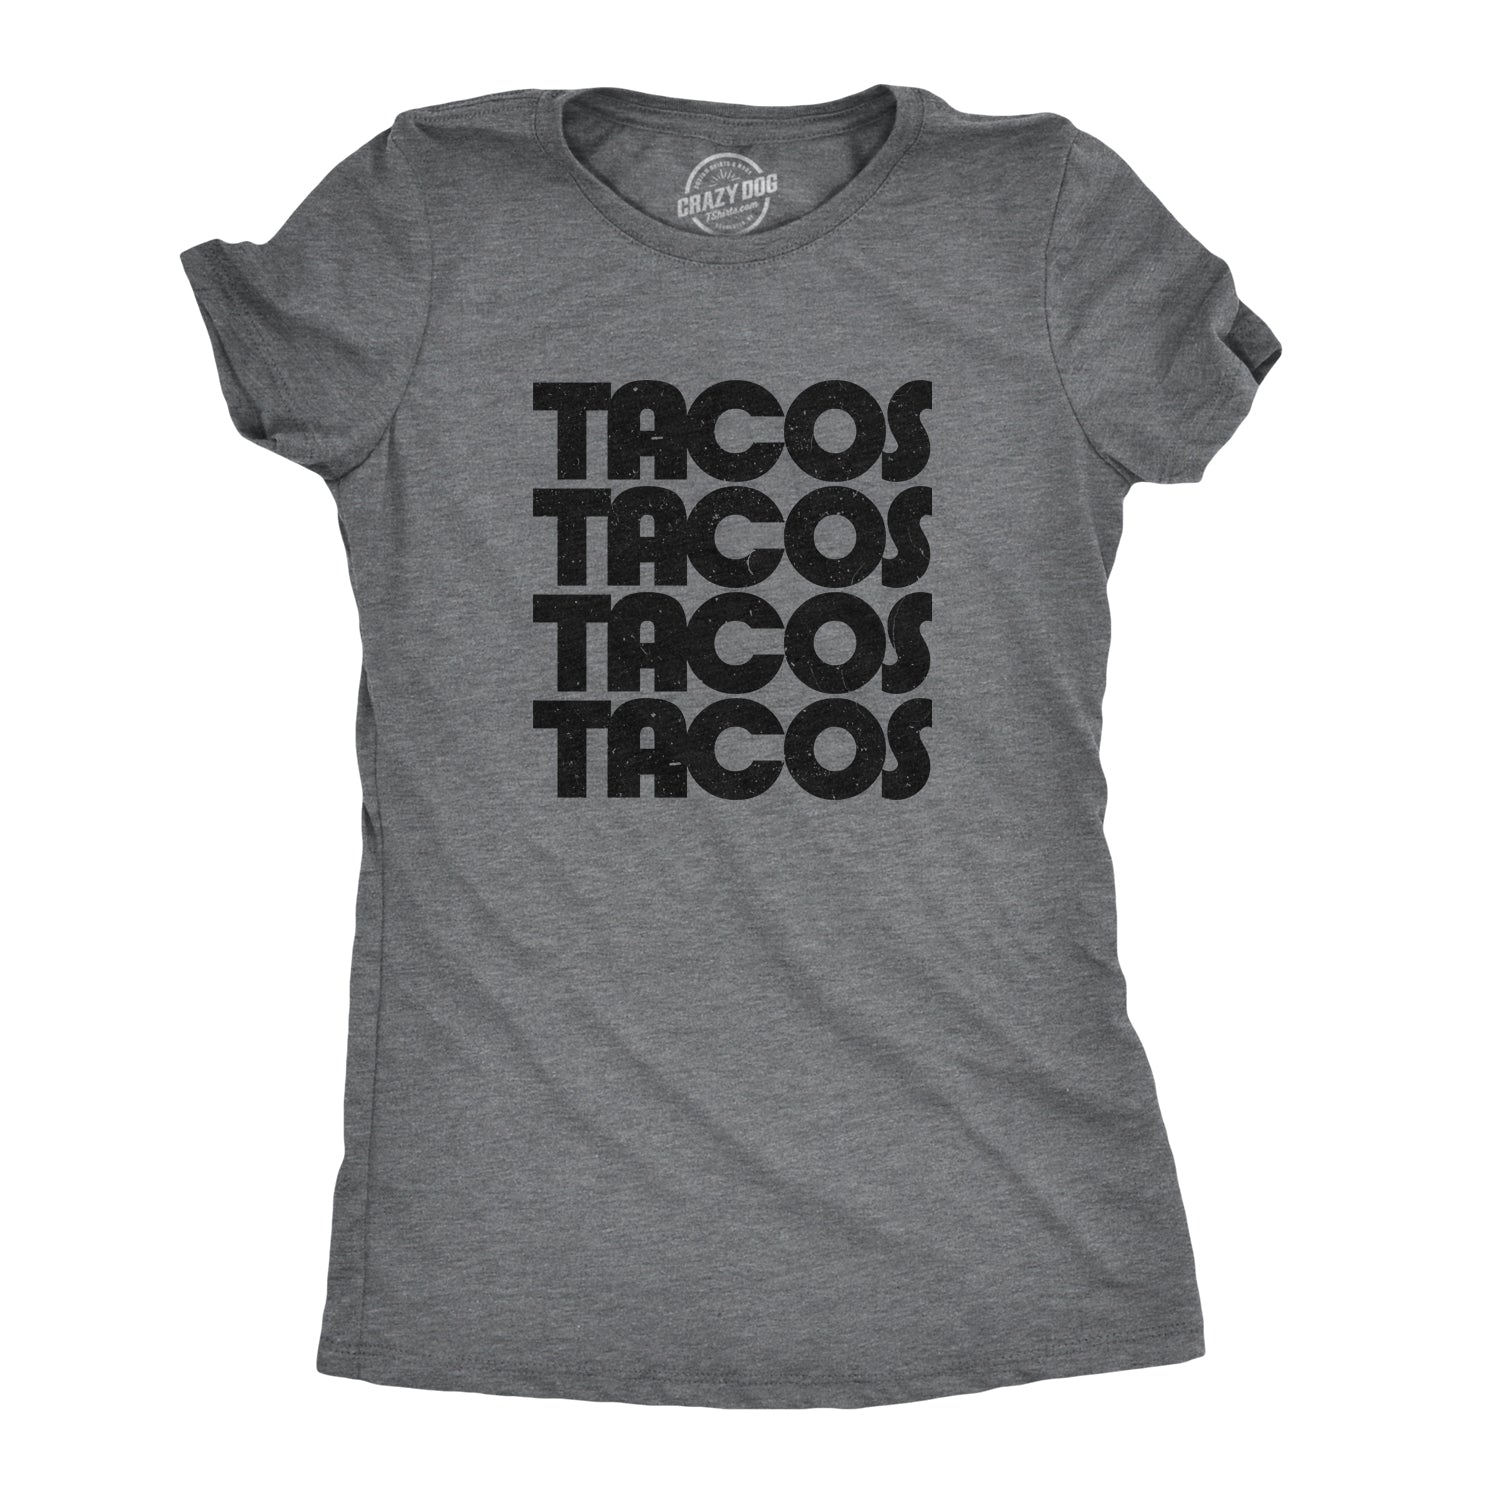 Funny Dark Heather Grey Tacos Tacos Tacos Womens T Shirt Nerdy Cinco De Mayo Food Retro Tee